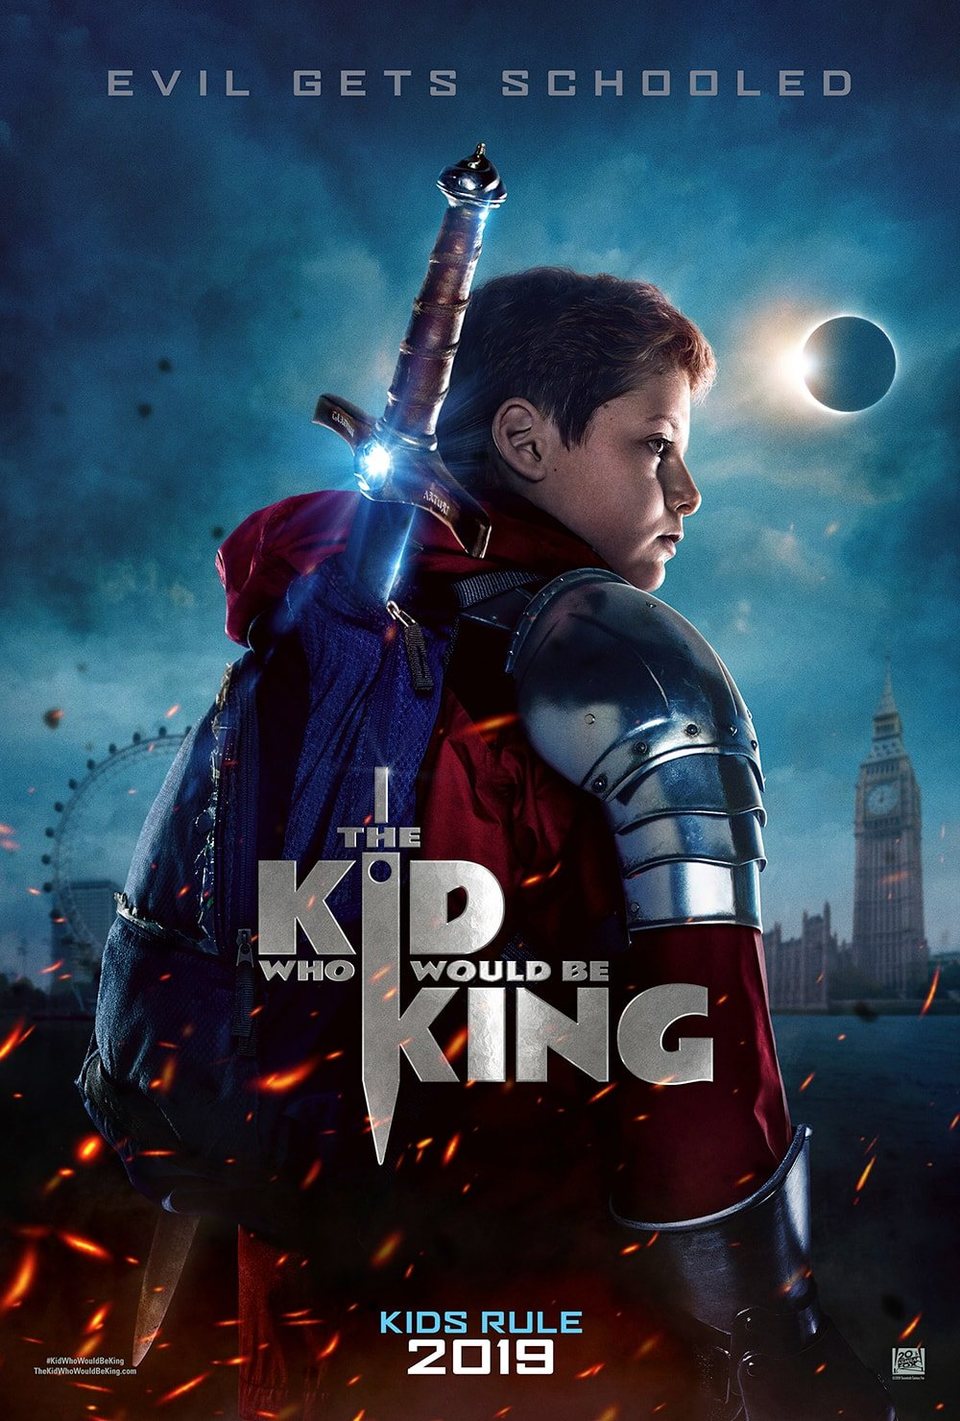 Cartel de El niño que pudo ser rey - Poster UK 'The Kid Who Would Be King'